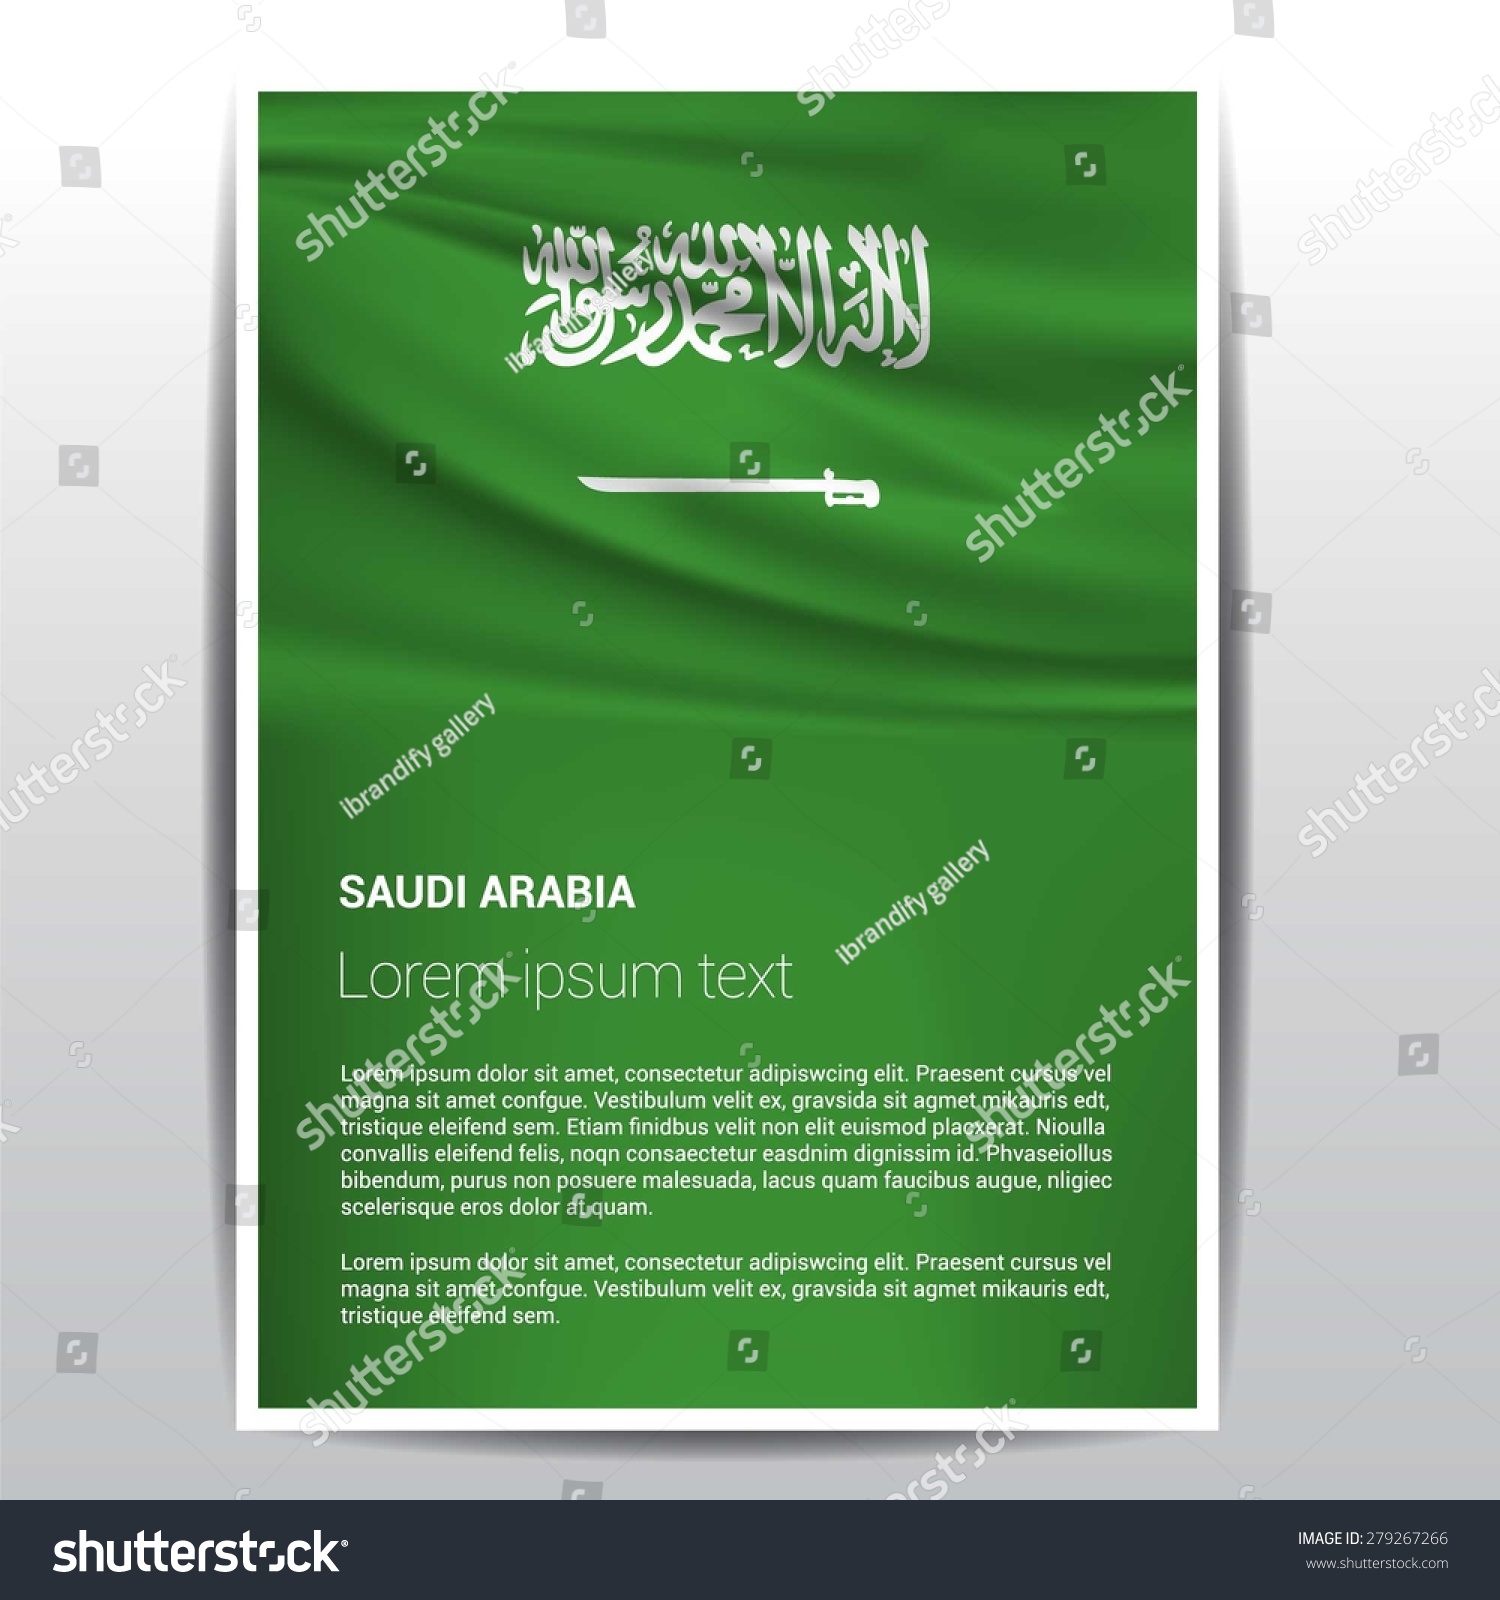 Saudi arabia leaflet Images, Stock Photos & Vectors Shutterstock